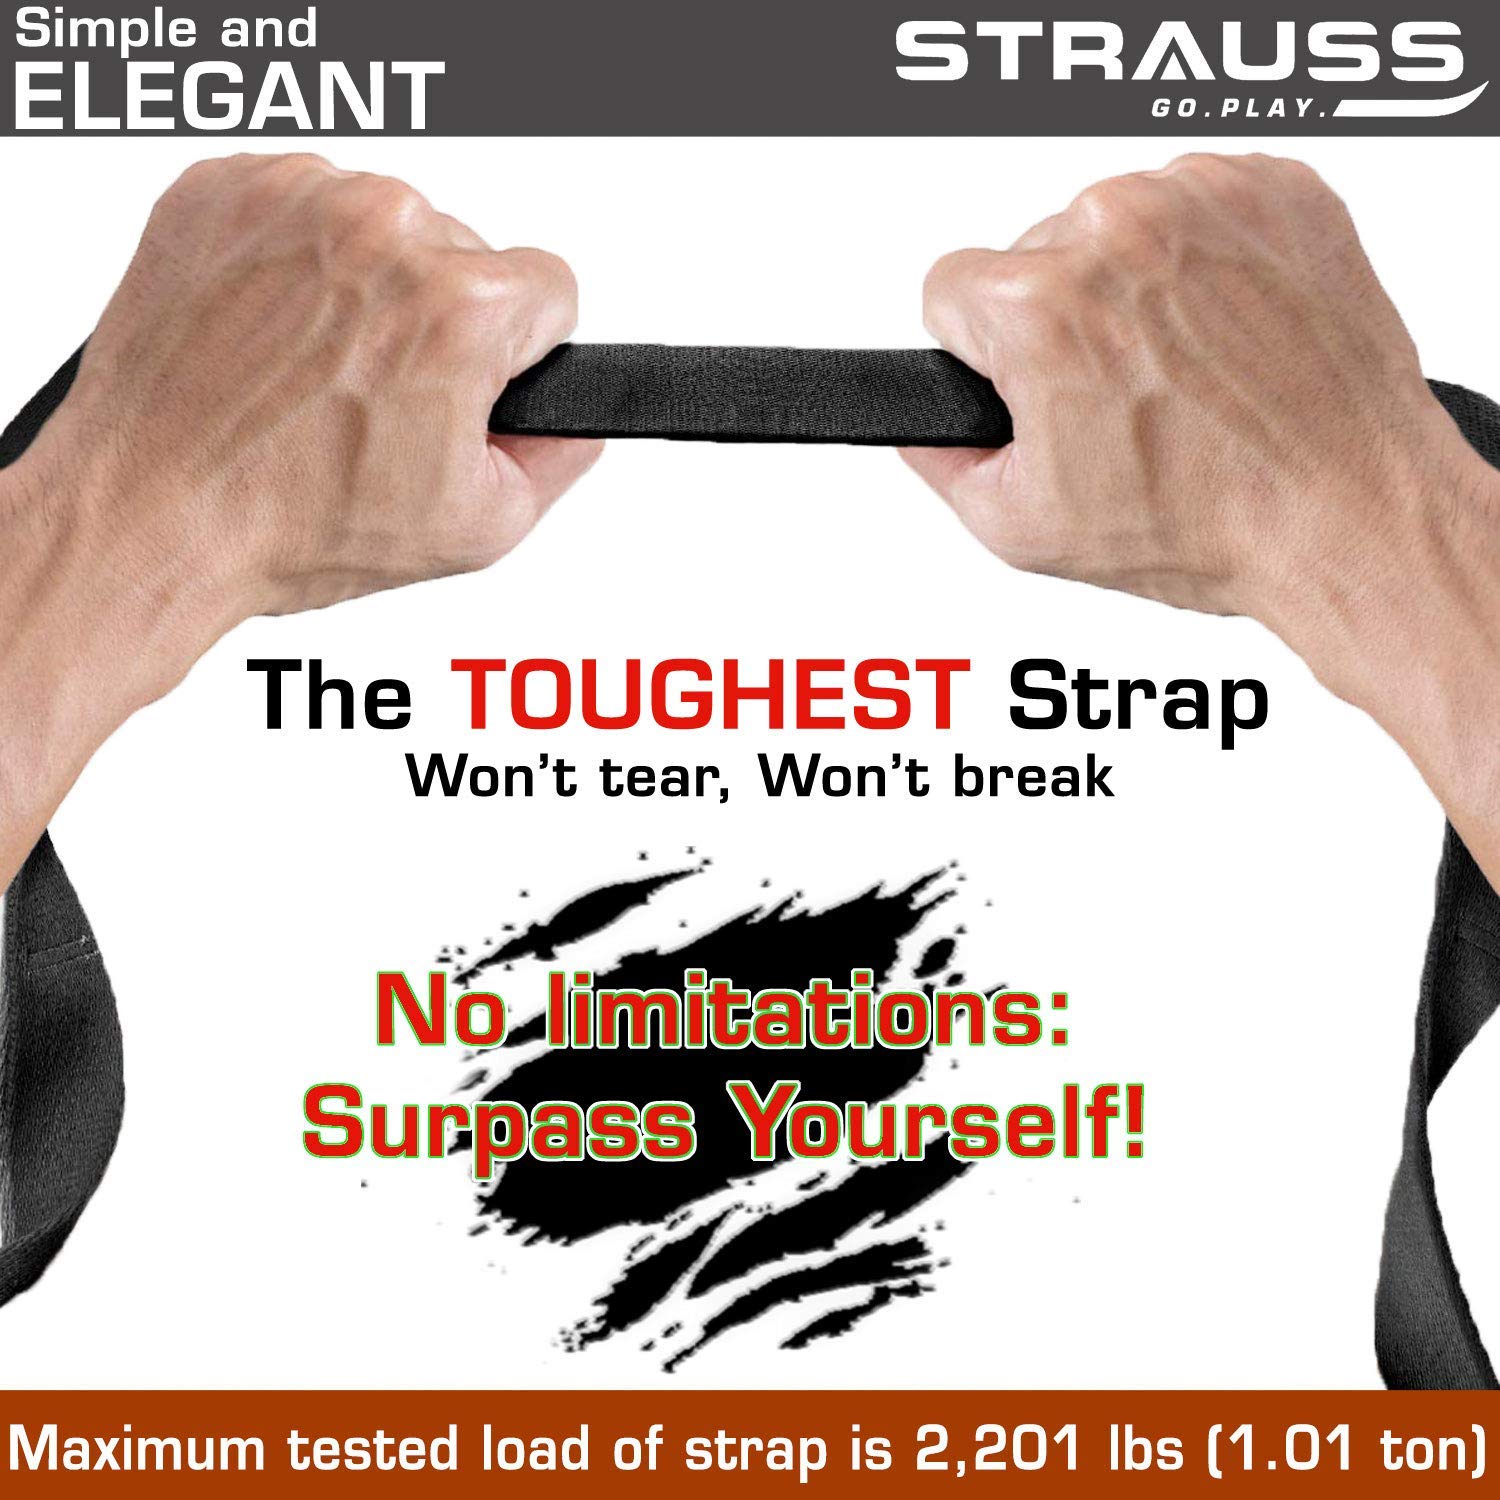 Strauss  Yoga Mat, 6 mm, (Purple) and Yoga Shoes, (Black)